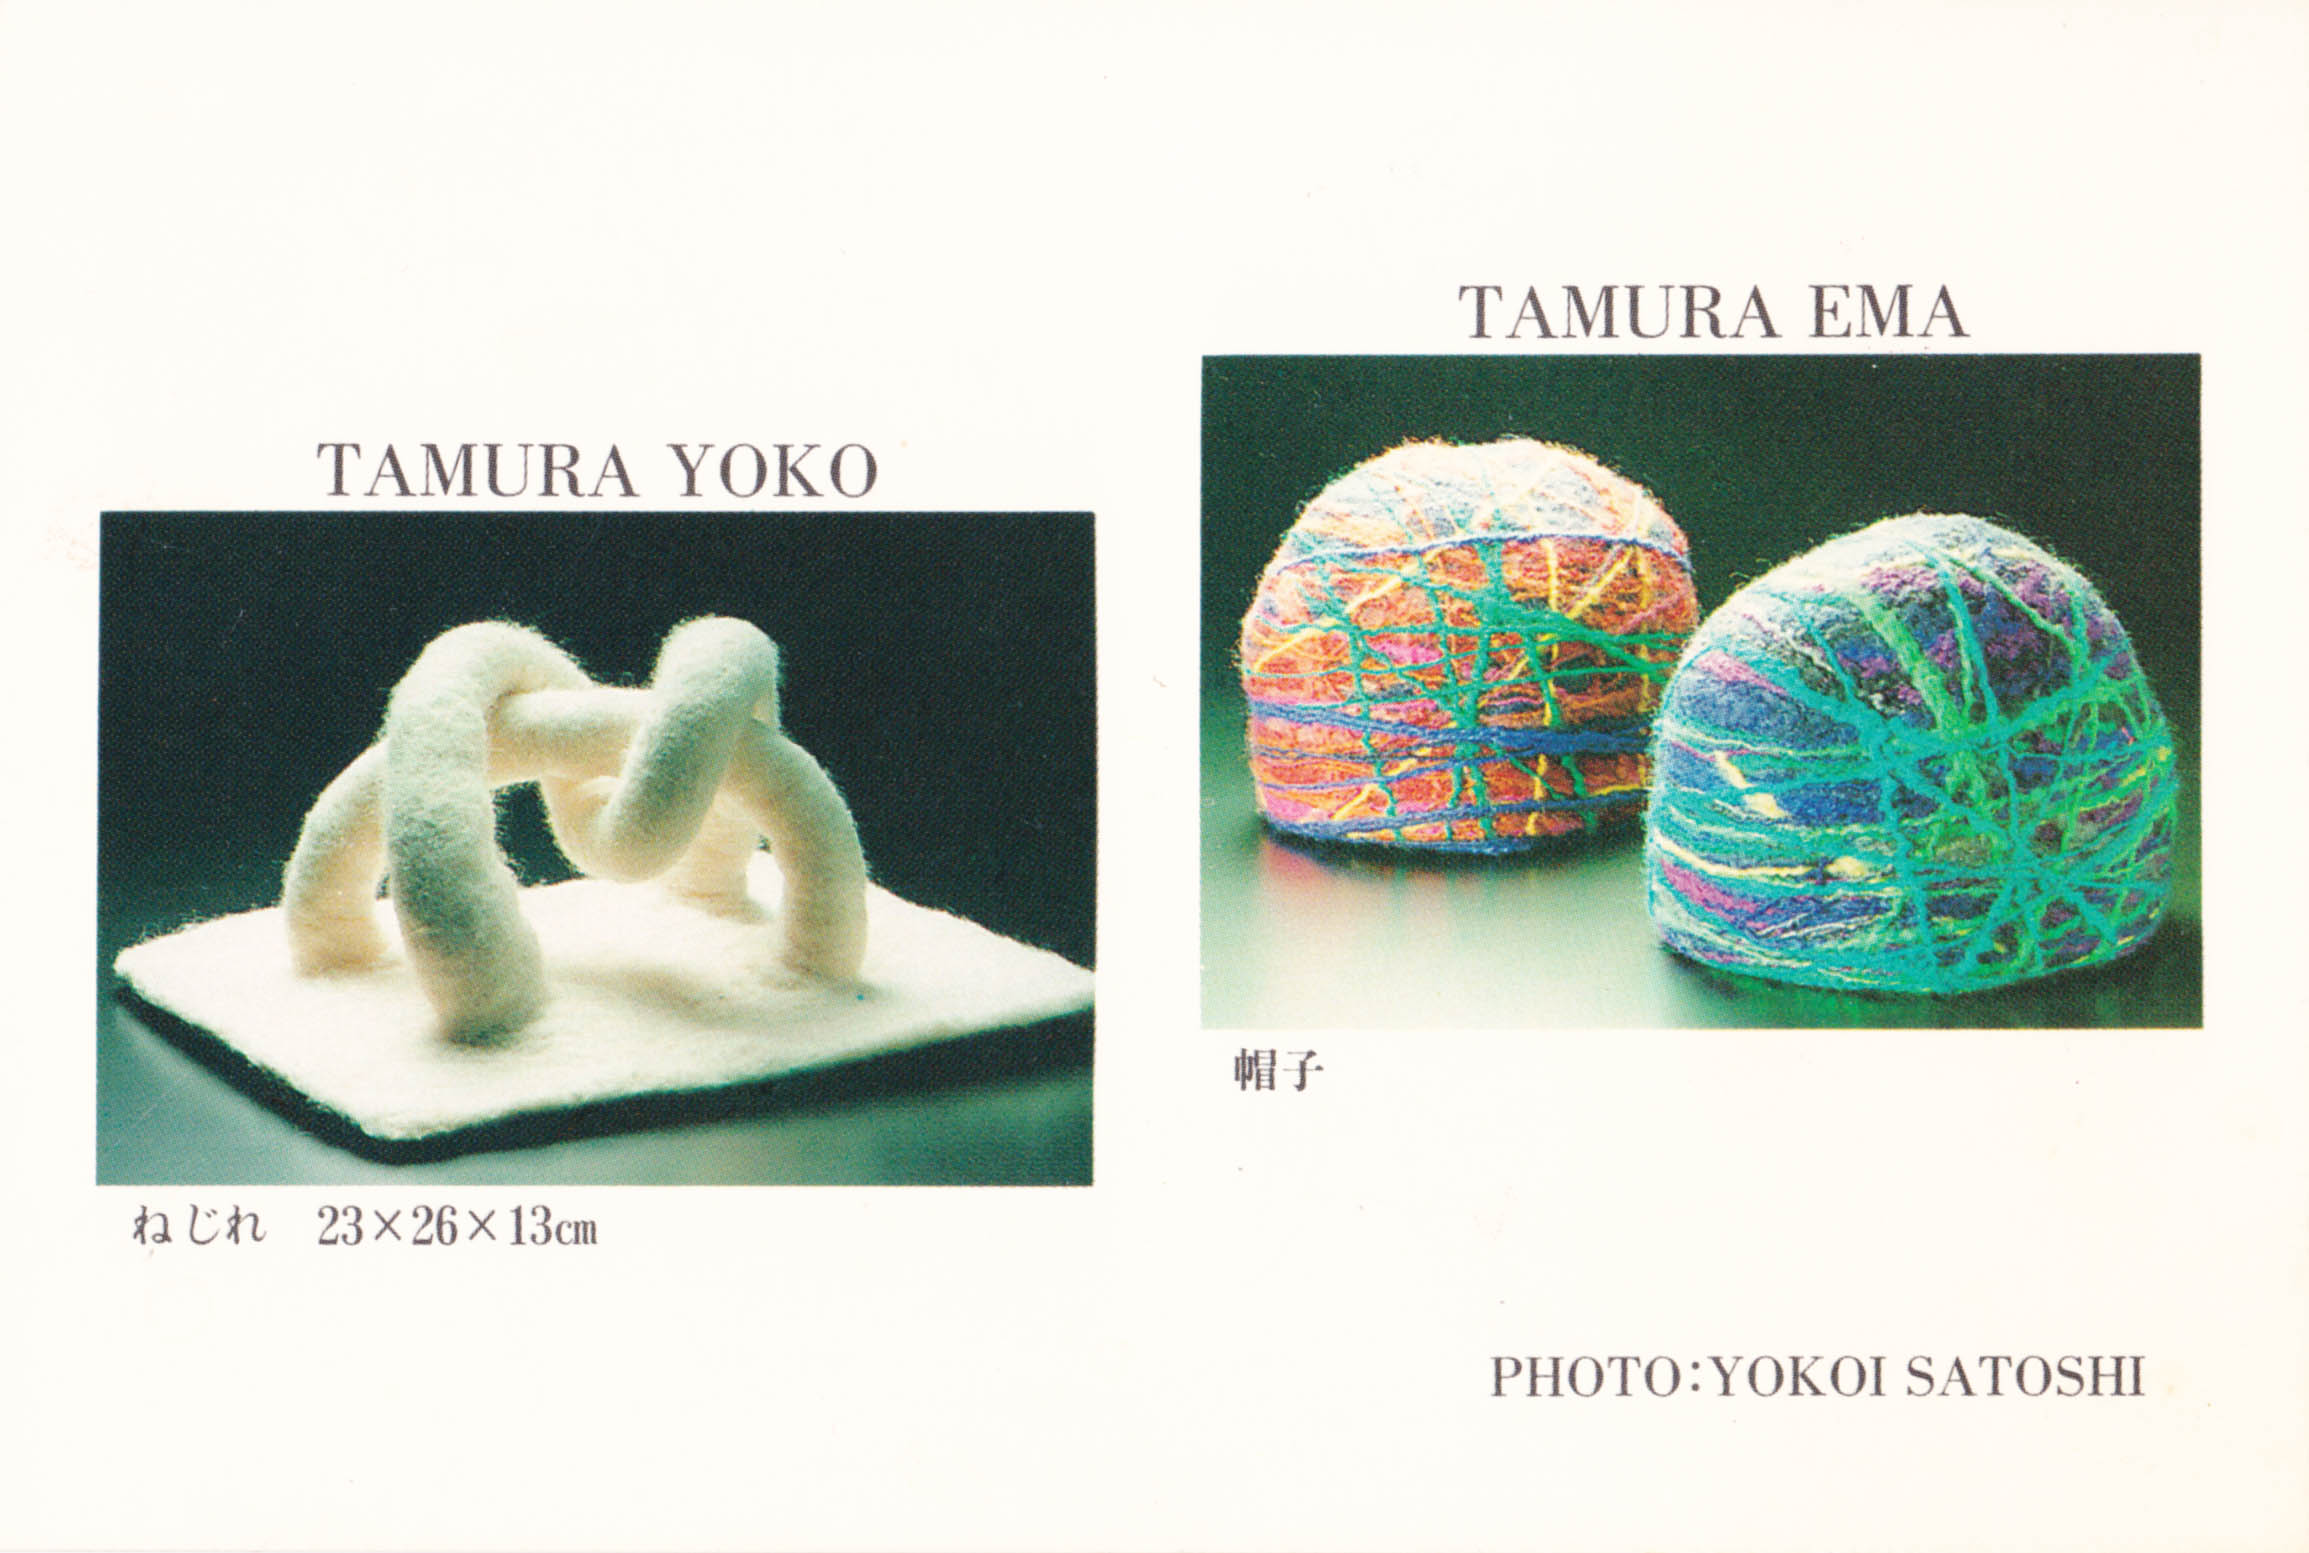 May 1995 The Joint Felt's exhibition Yoko Tamura & Ema Tamura